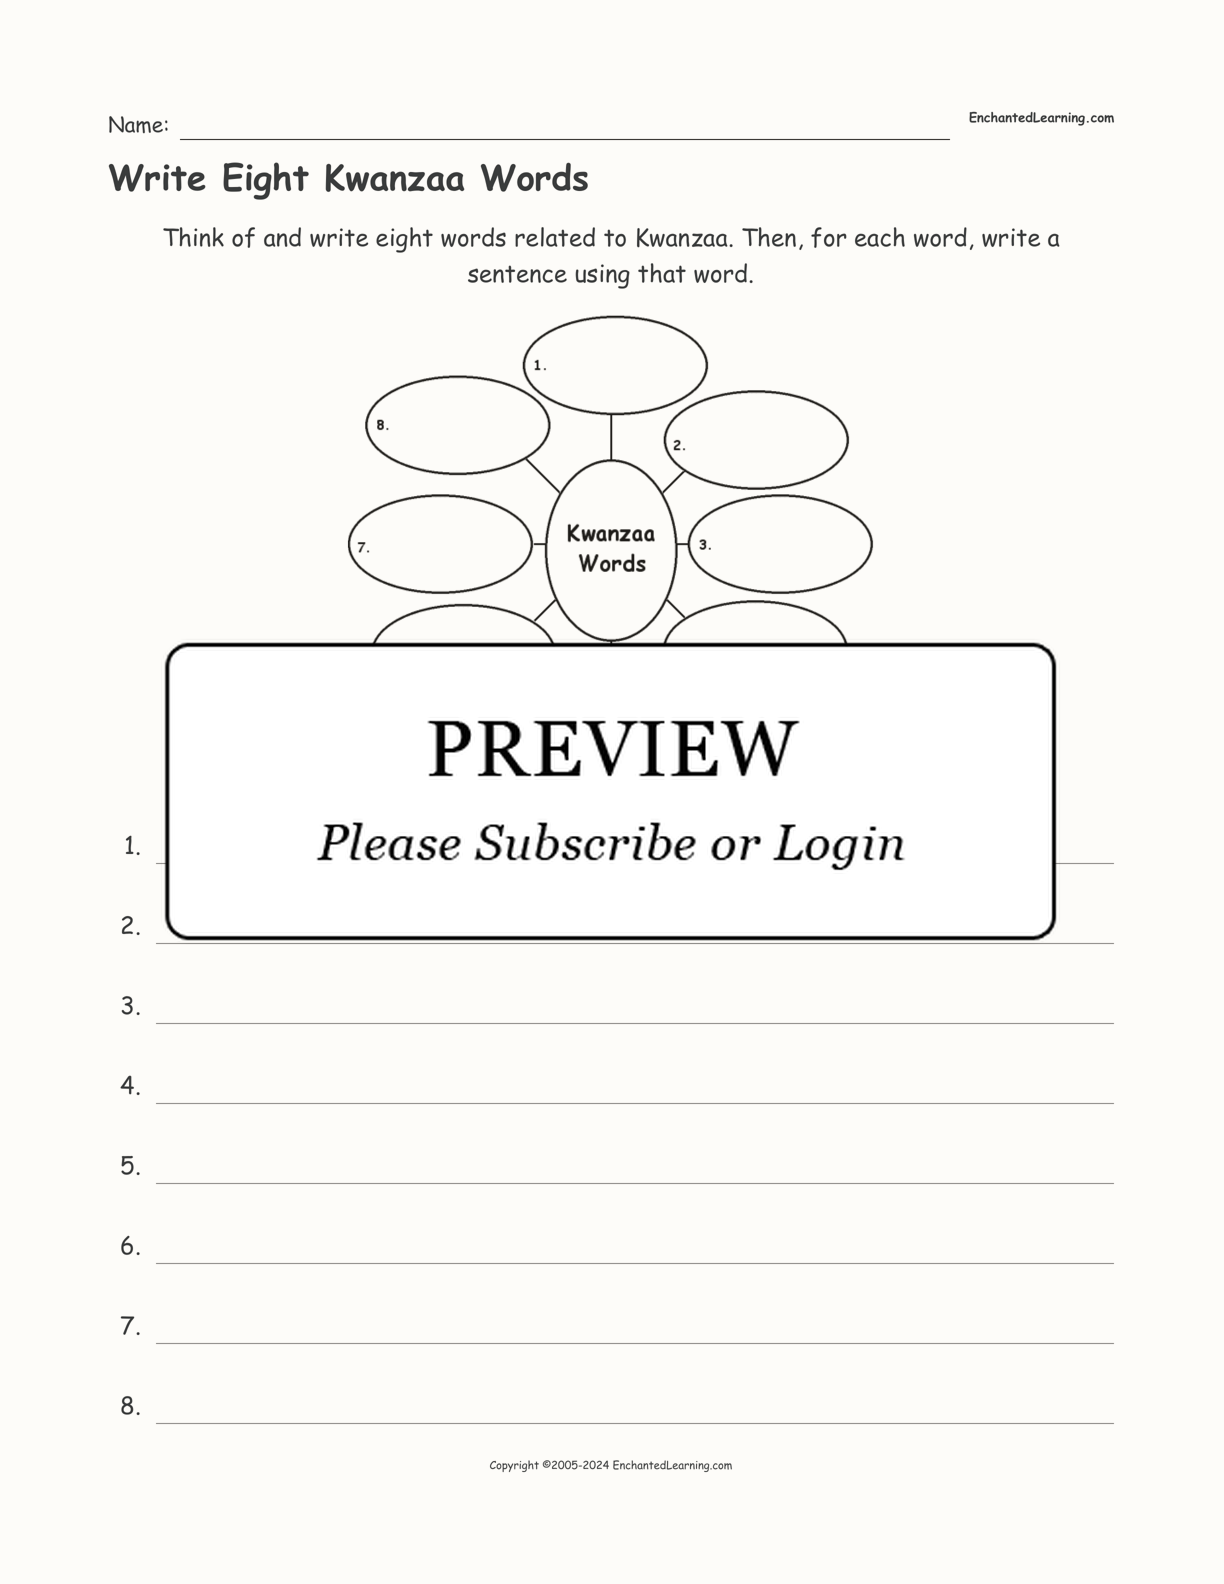 Write Eight Kwanzaa Words interactive worksheet page 1